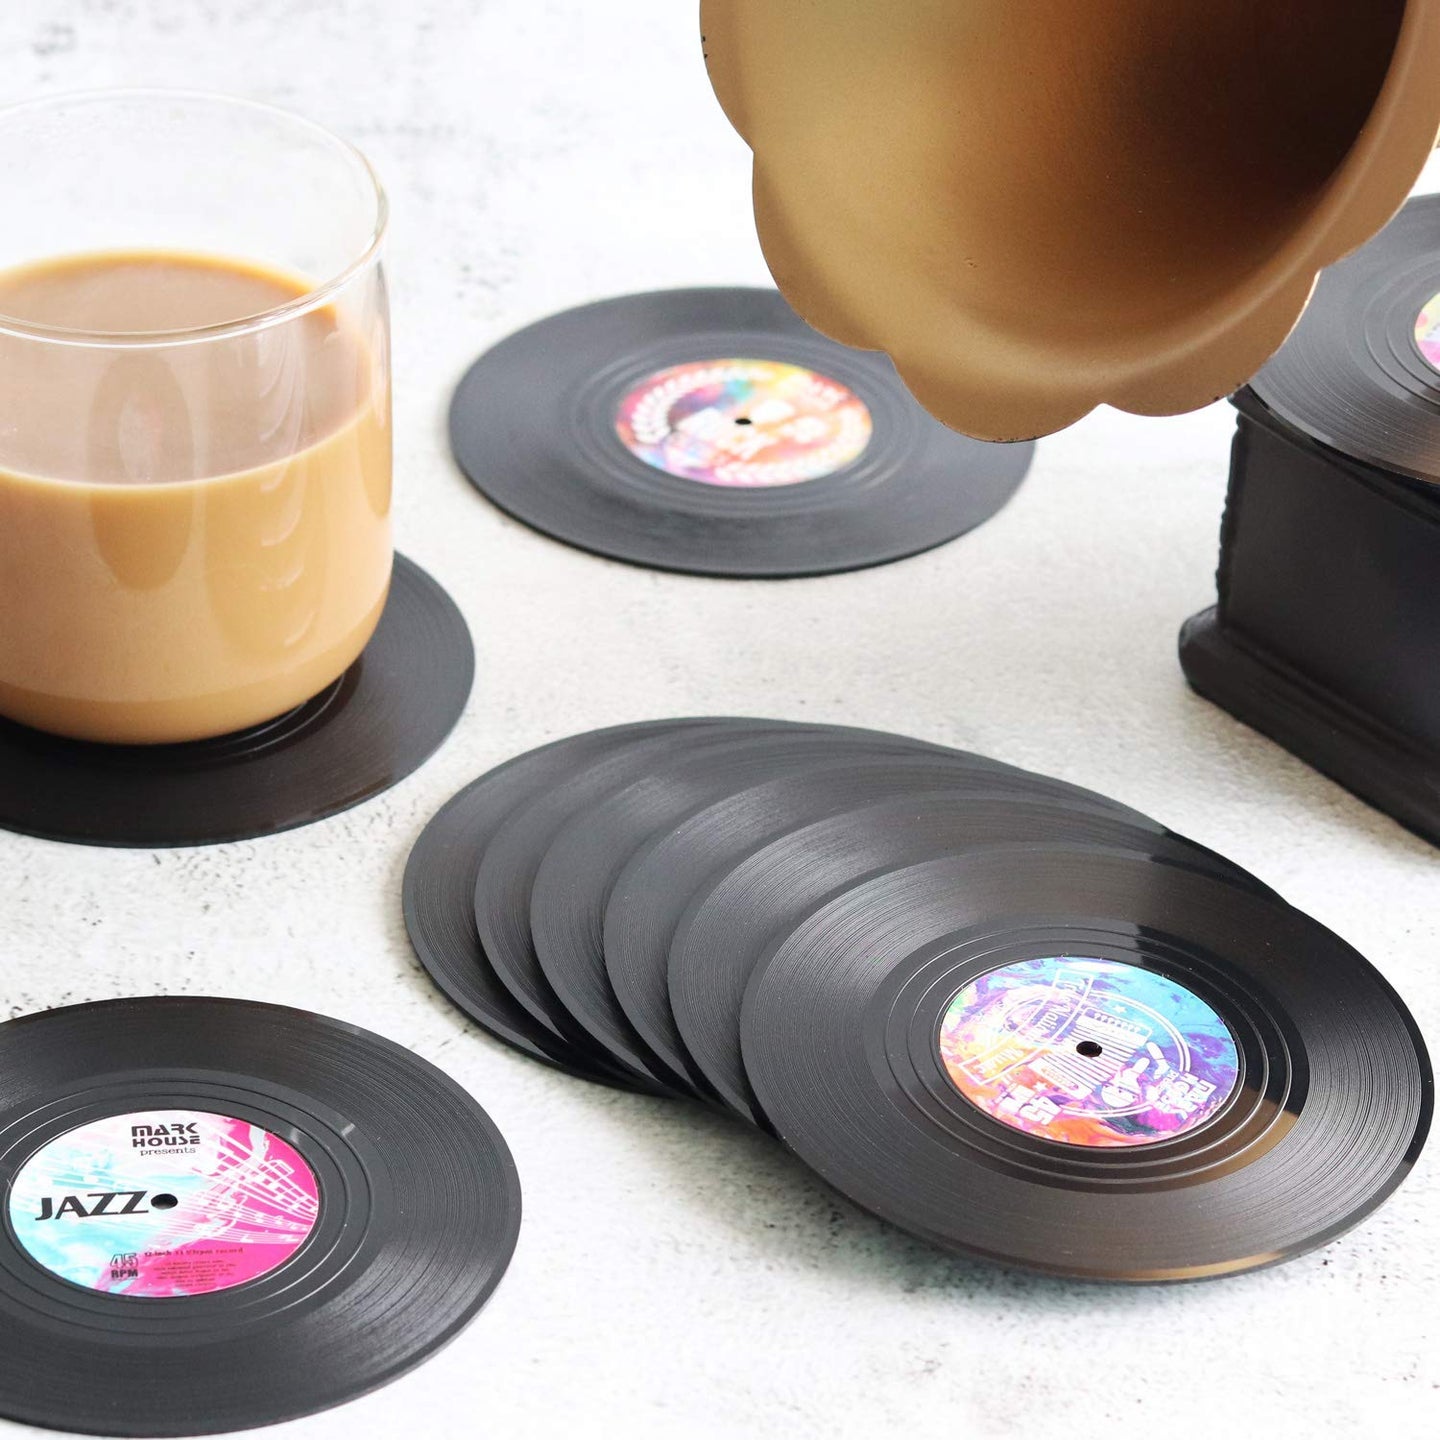 vinyl coasters on a table